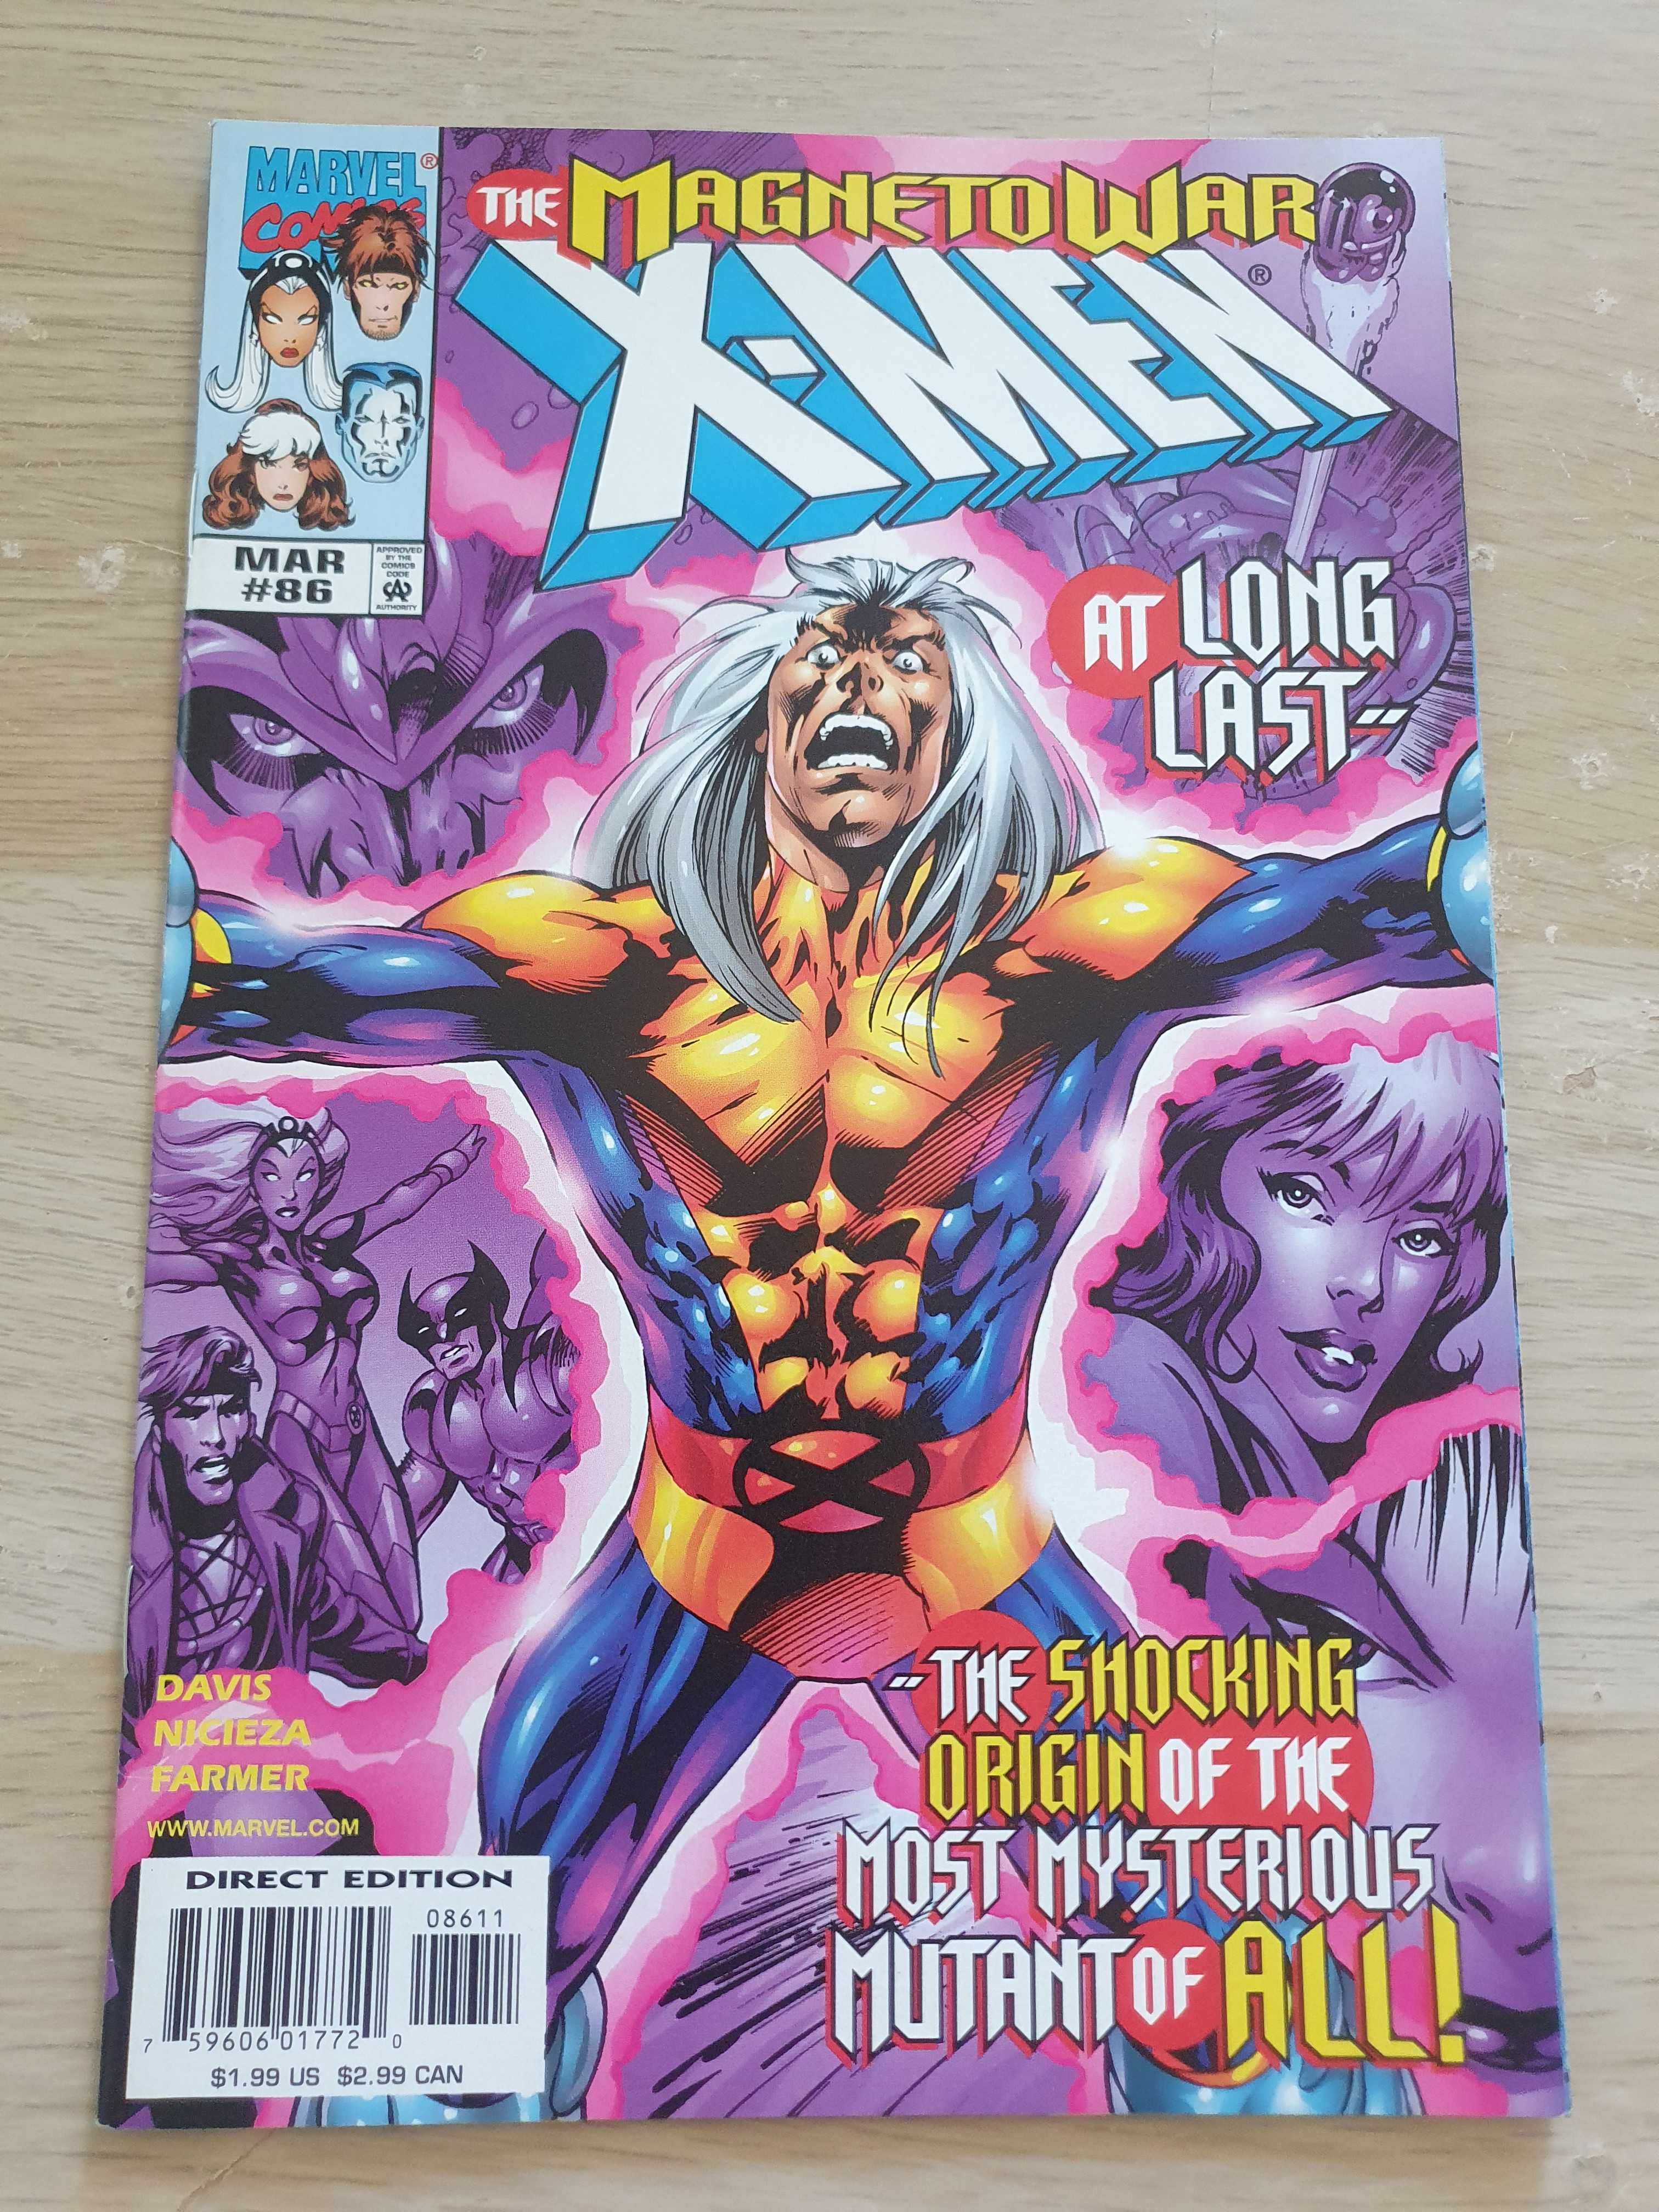 Magneto War - The Uncanny X-men vol 1: 365, 366, 368 X-men: 86 (ZM126)